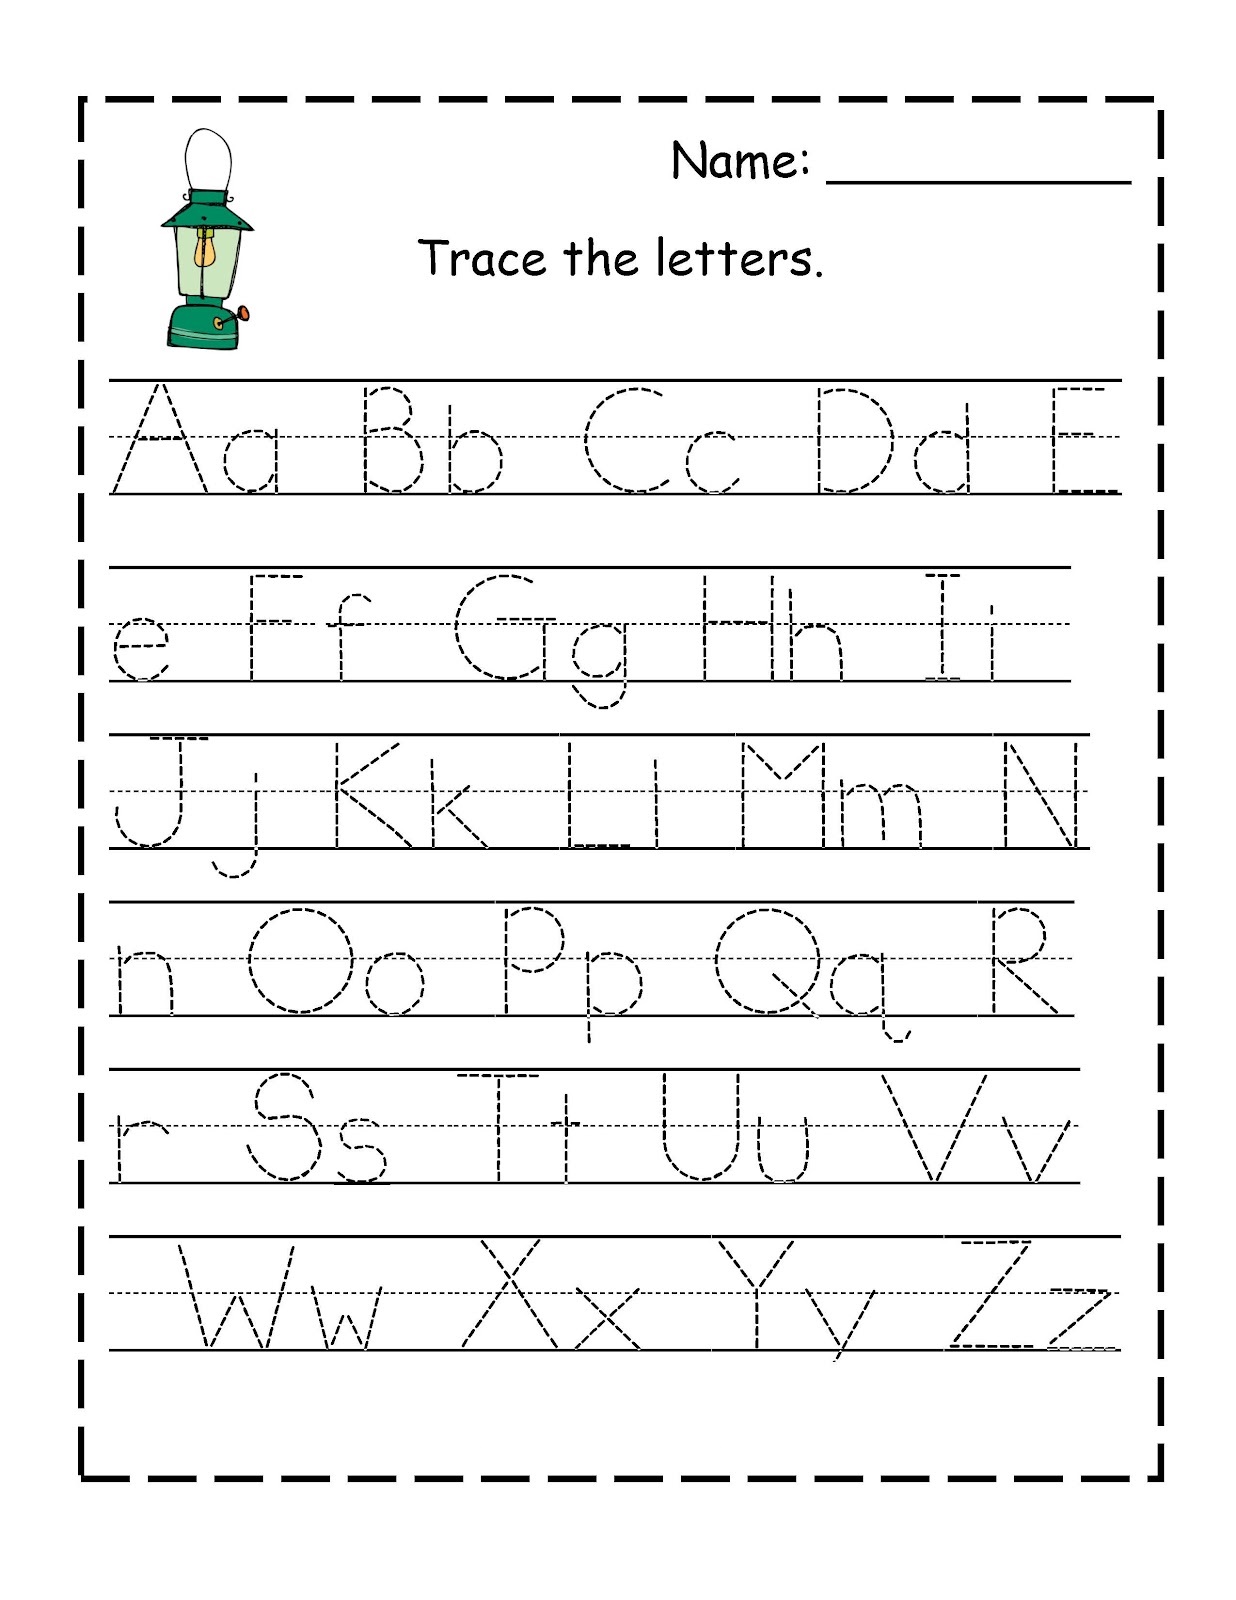 Traceable Alphabets for Children | Activity Shelter